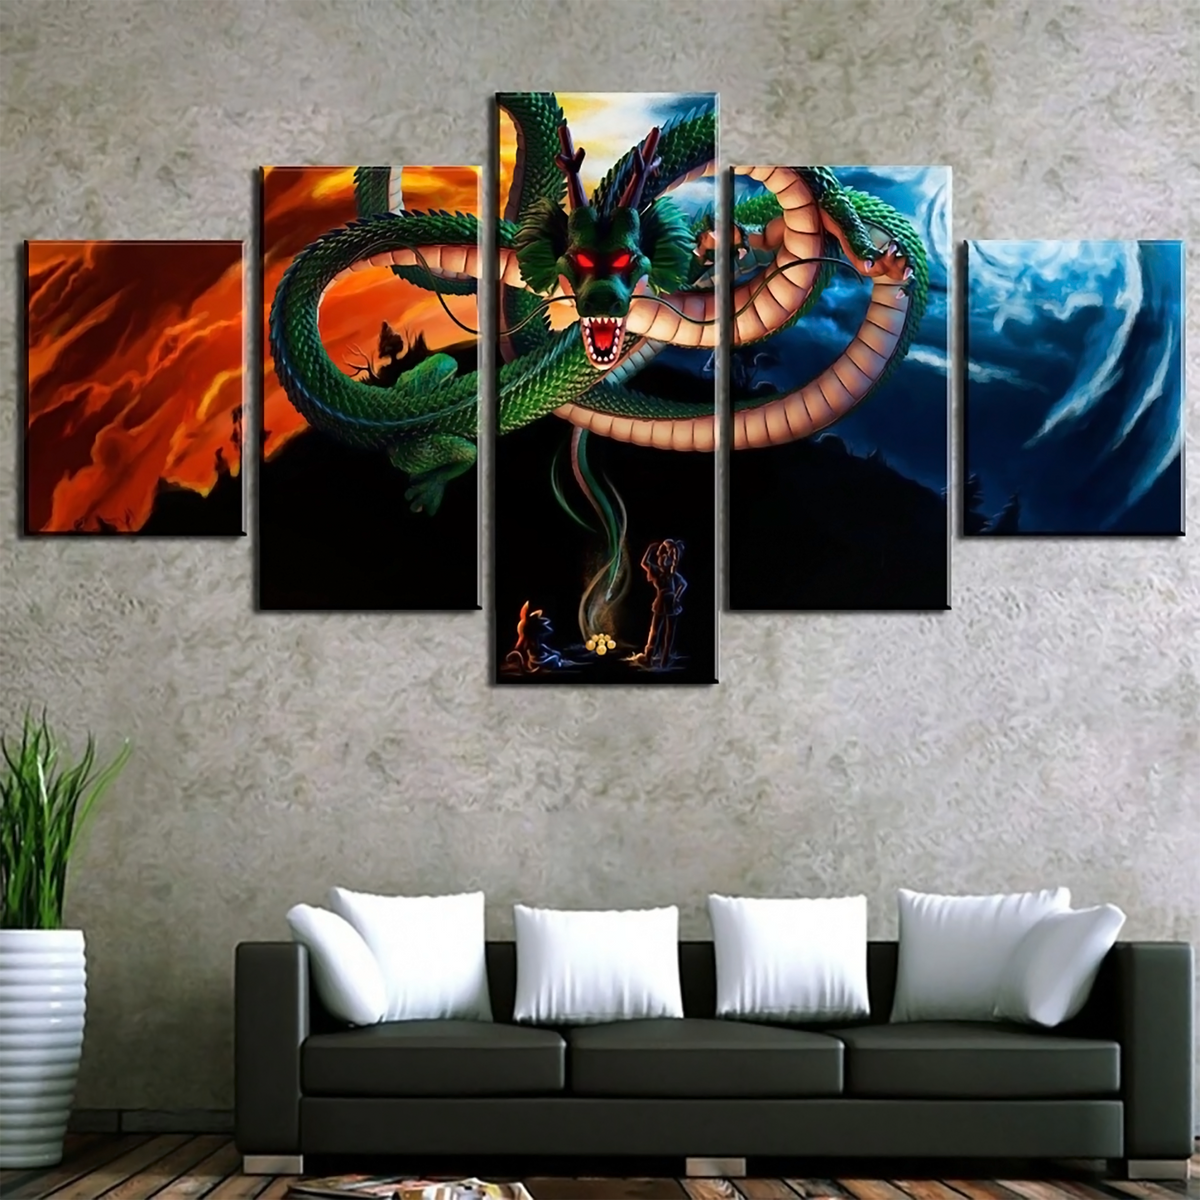 Dragon Ball - 5 Pieces Wall Art - Shenglong - Goku - Bulma - Printed Wall Pictures Home Decor - Dragon Ball Poster - Dragon Ball Canvas